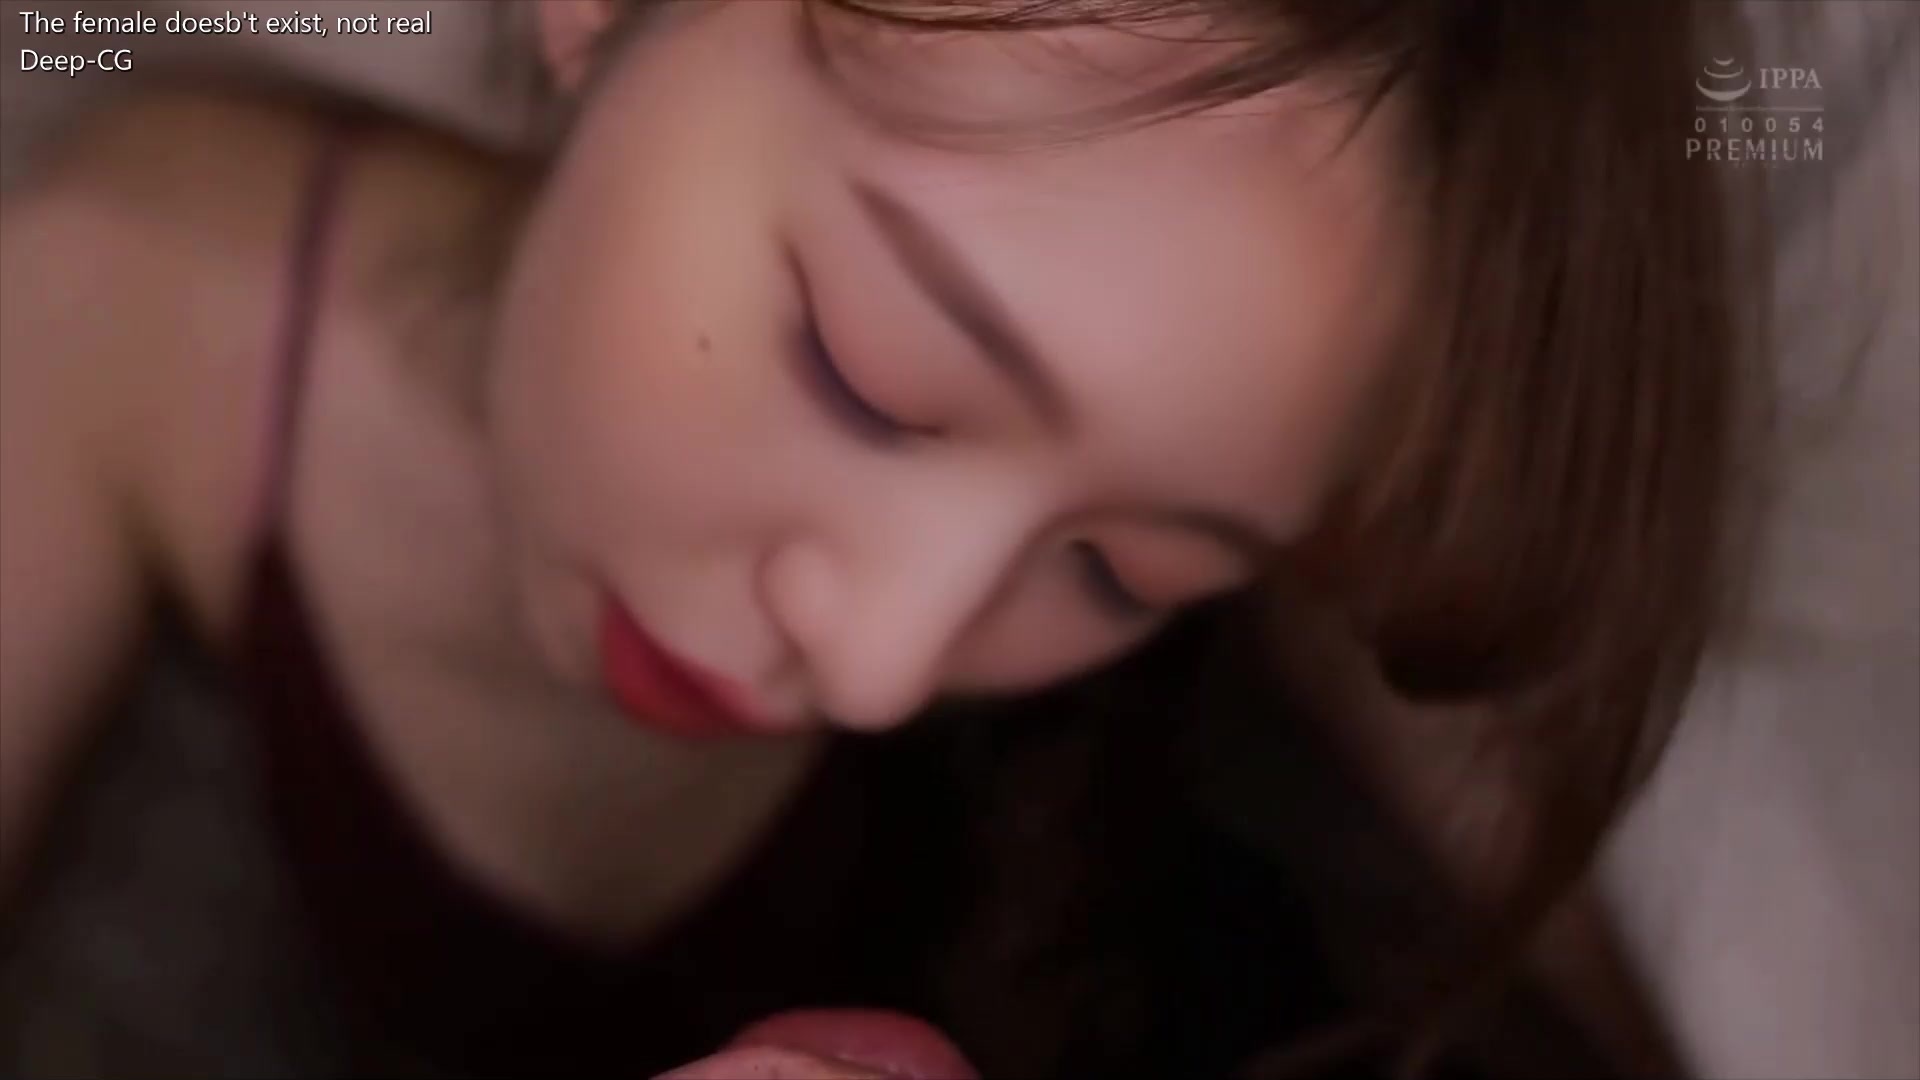 Wonyoung, IVE hot bed sex scenes - アイヴ ディープフェイクポルノ [PREMIUM]